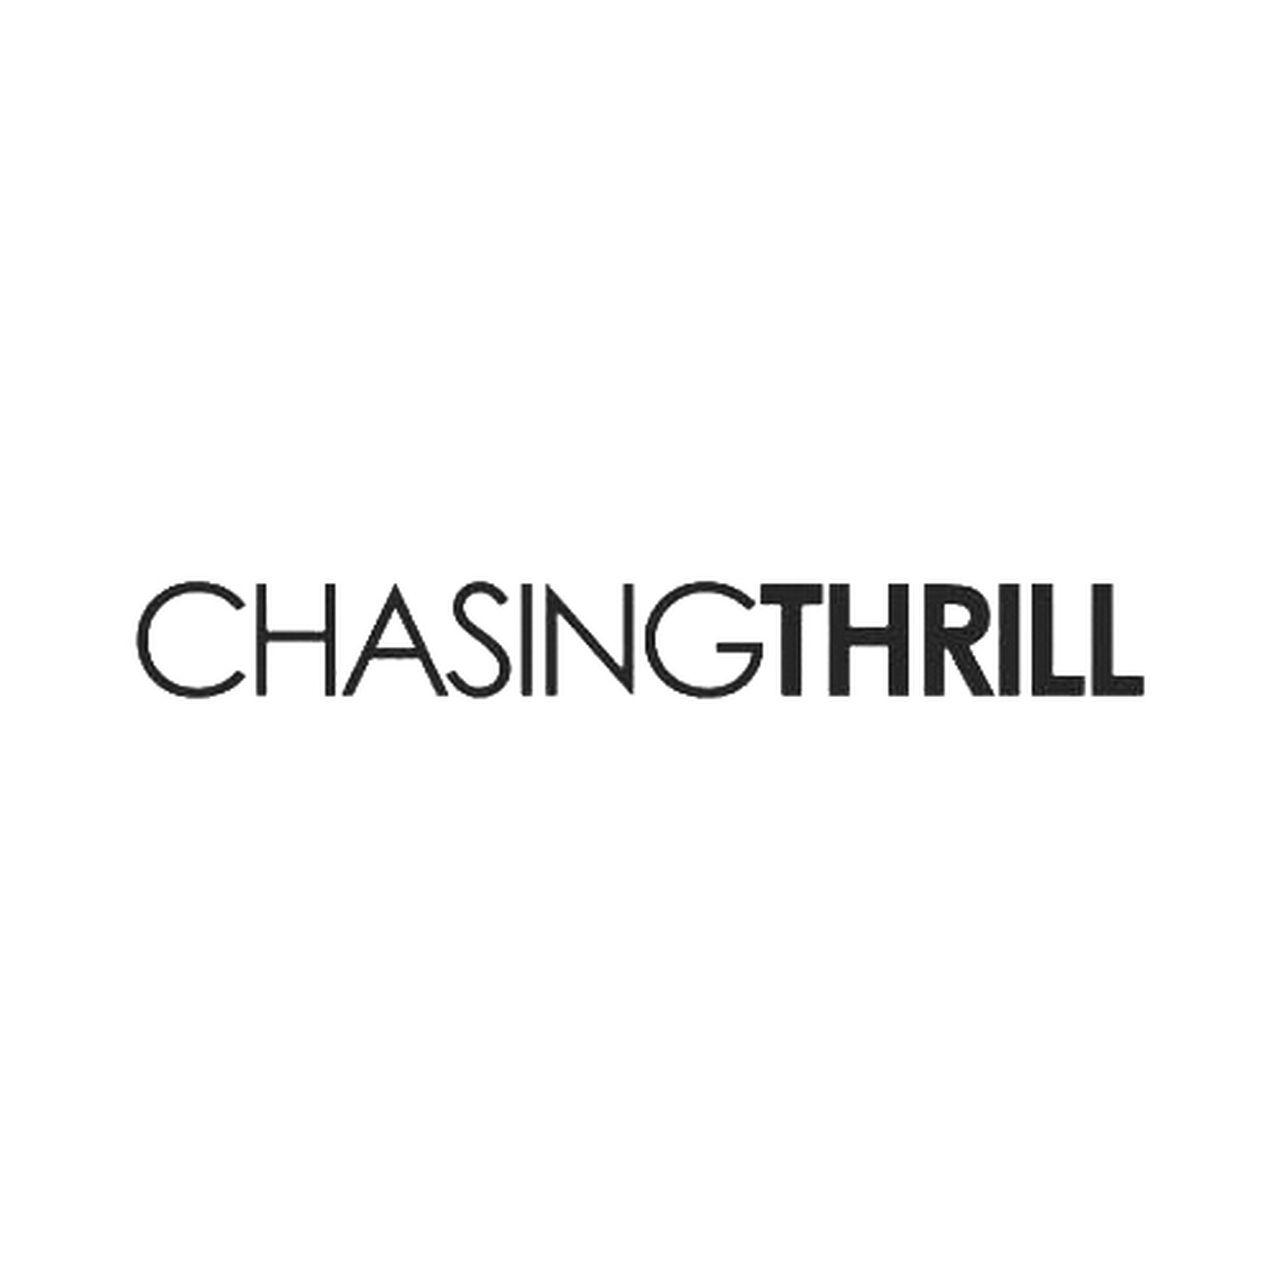 Chasing Logo - Chasing thrill Rock Band Logo Decal